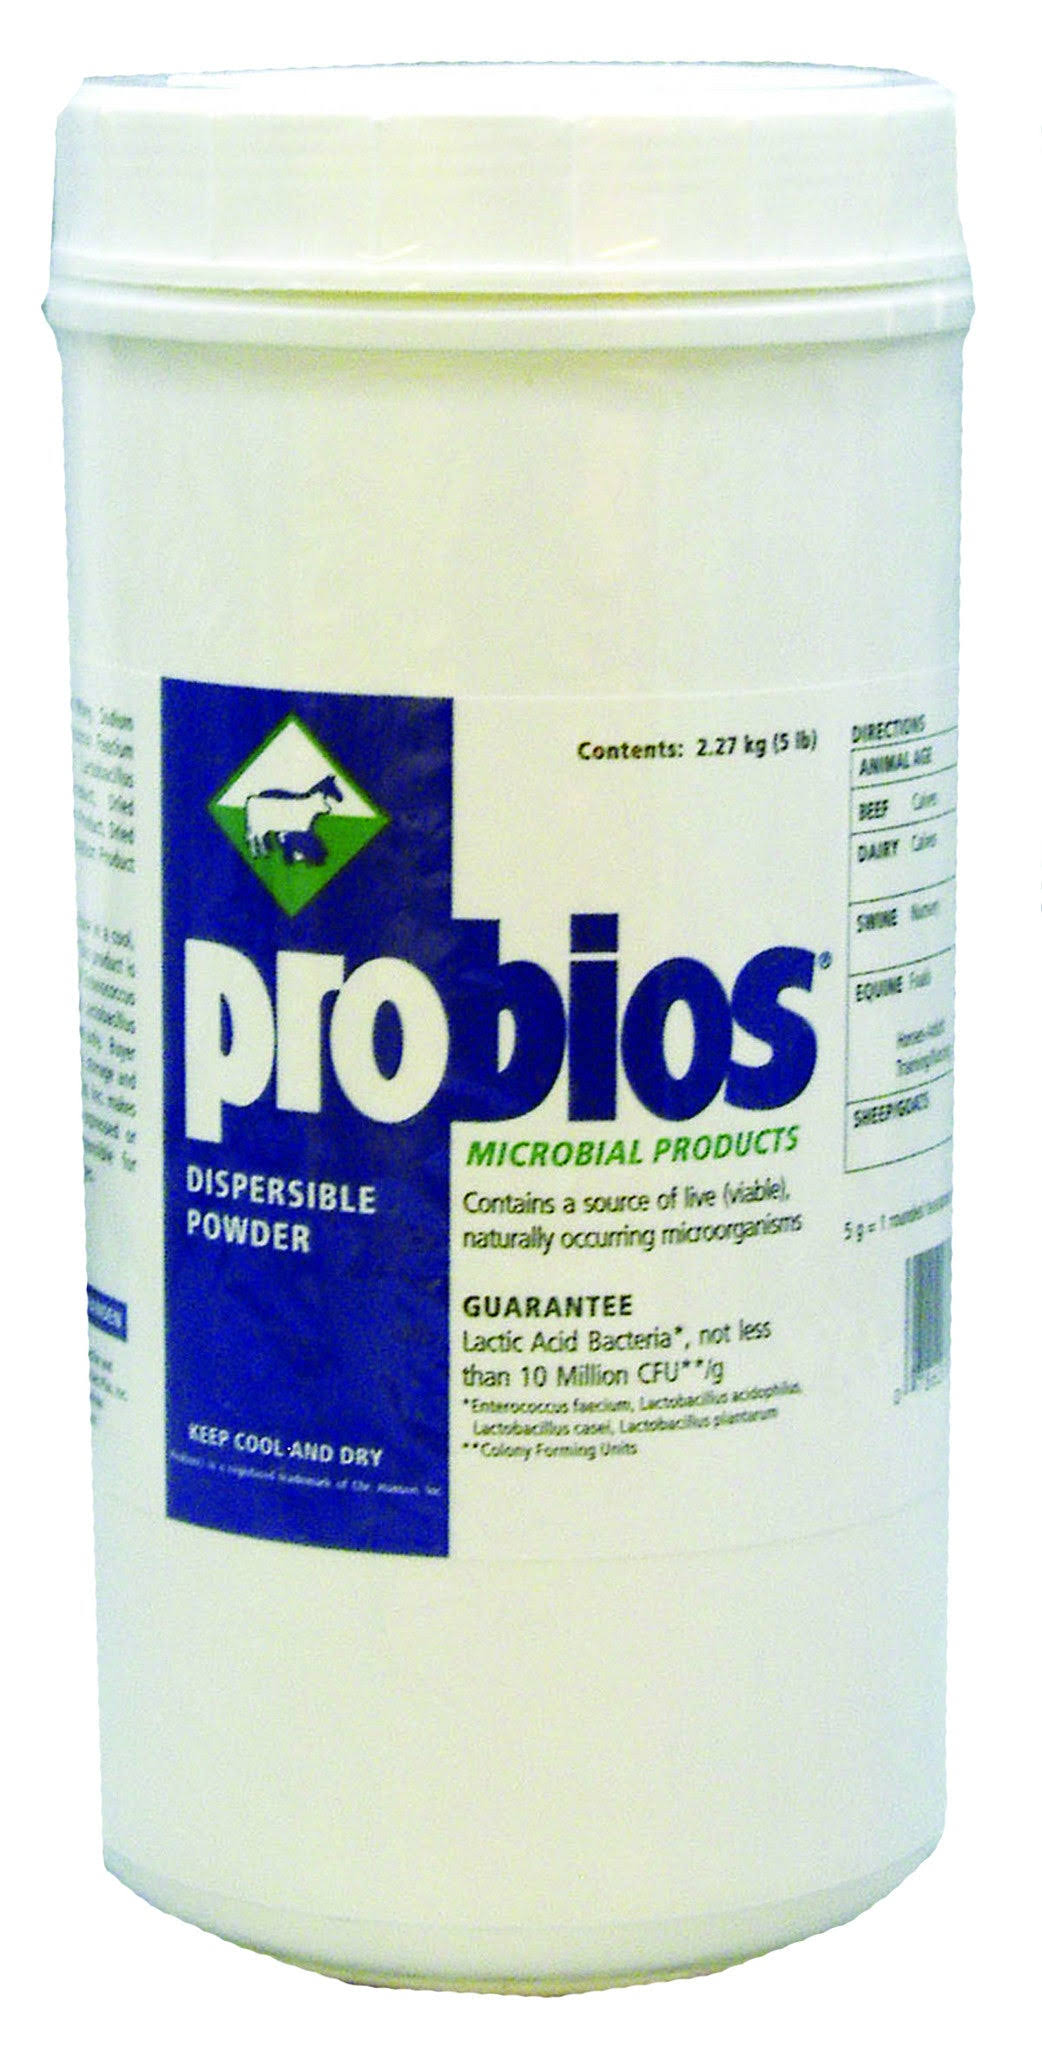 BioMac Probios Dispersible Powder